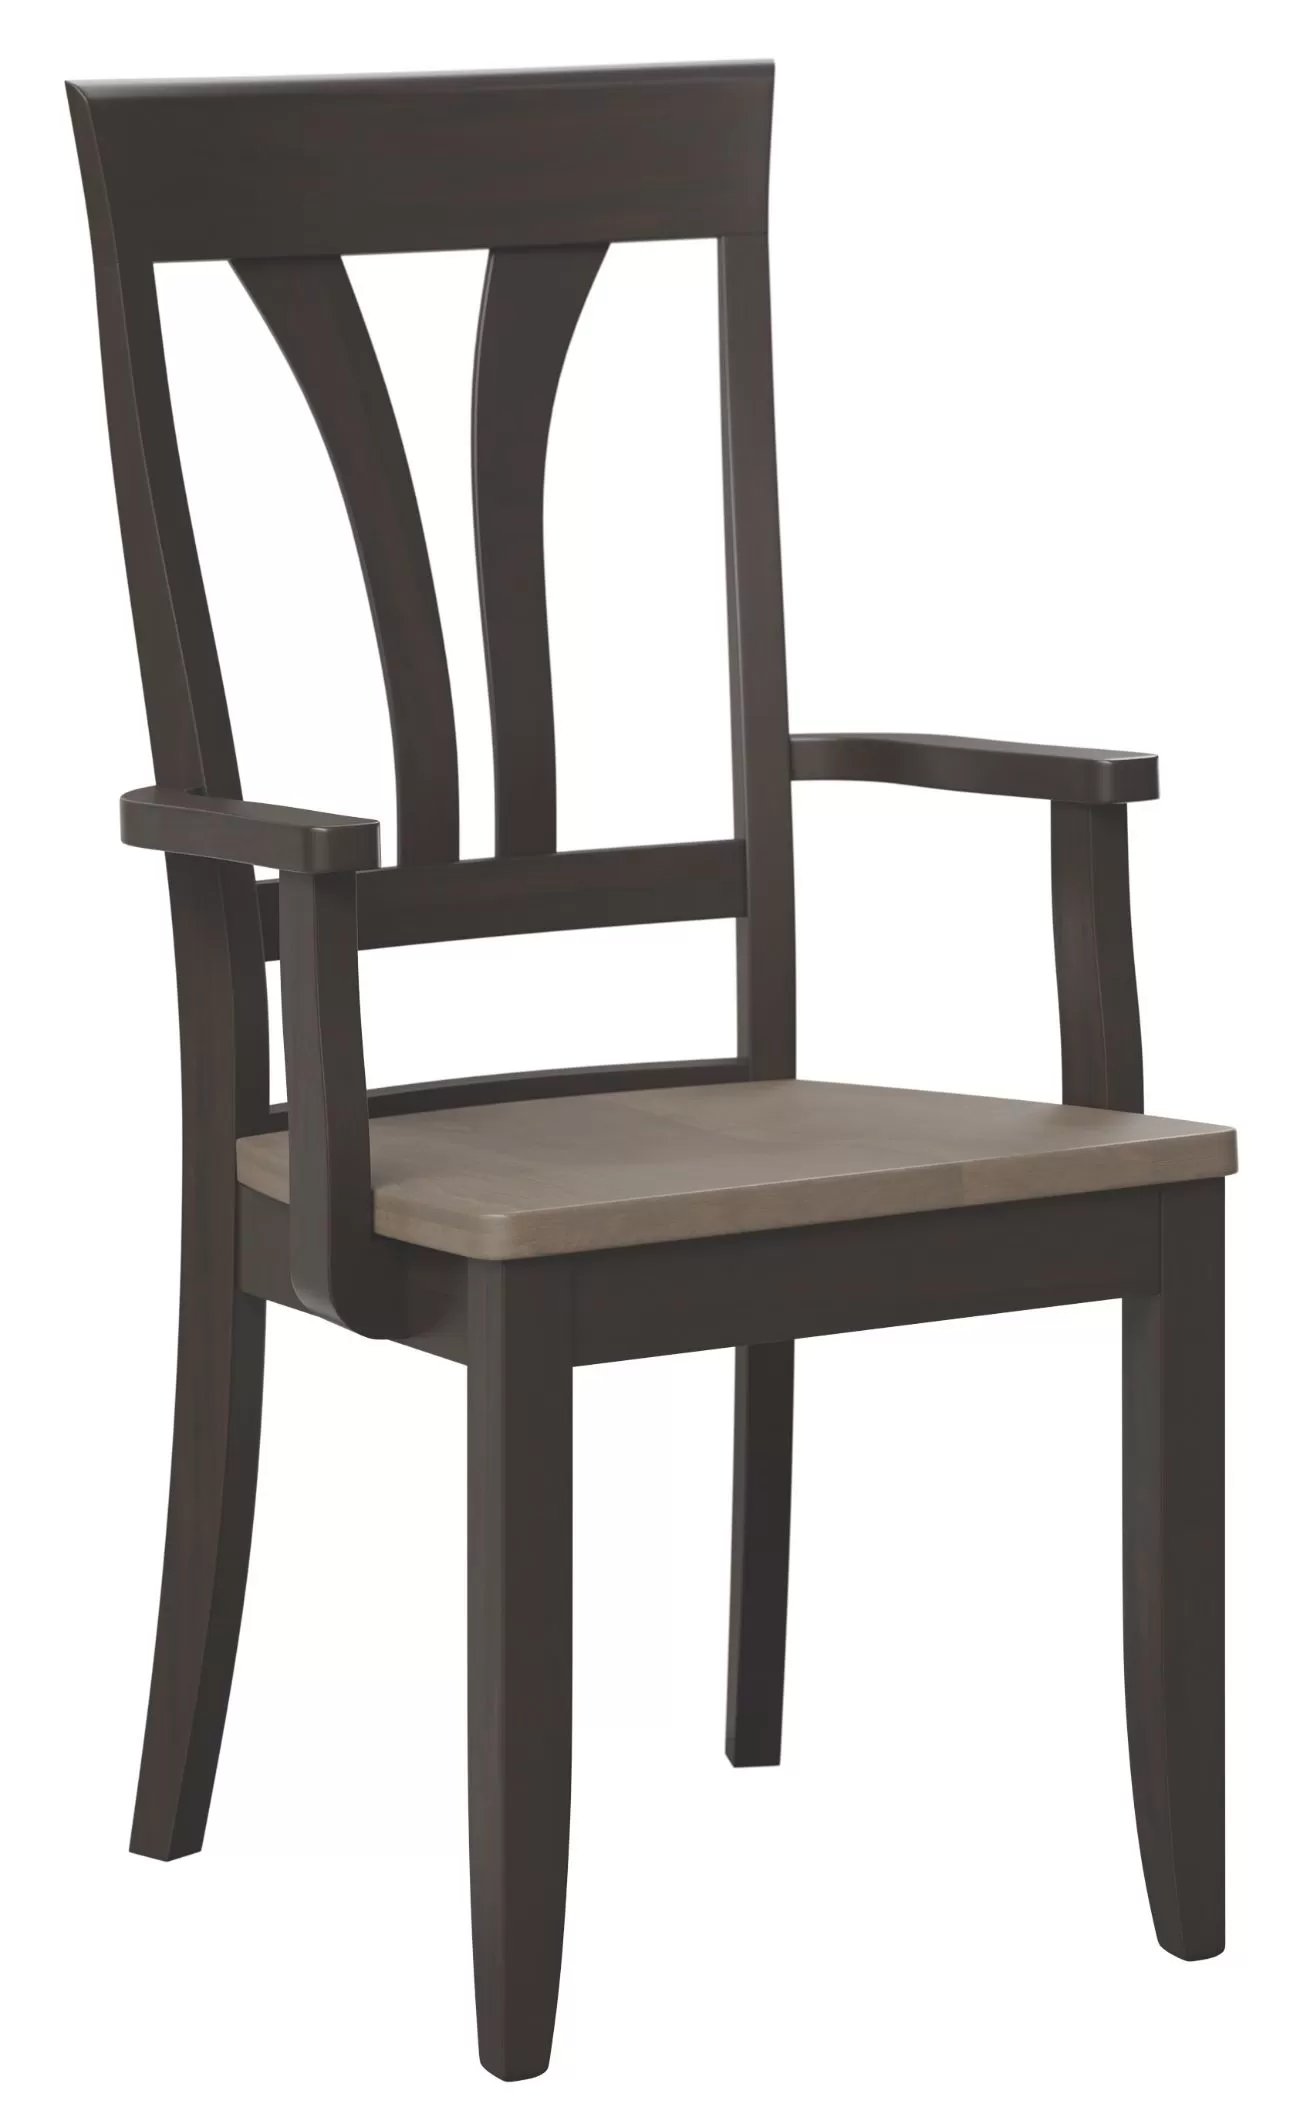 Glenwood arm chair